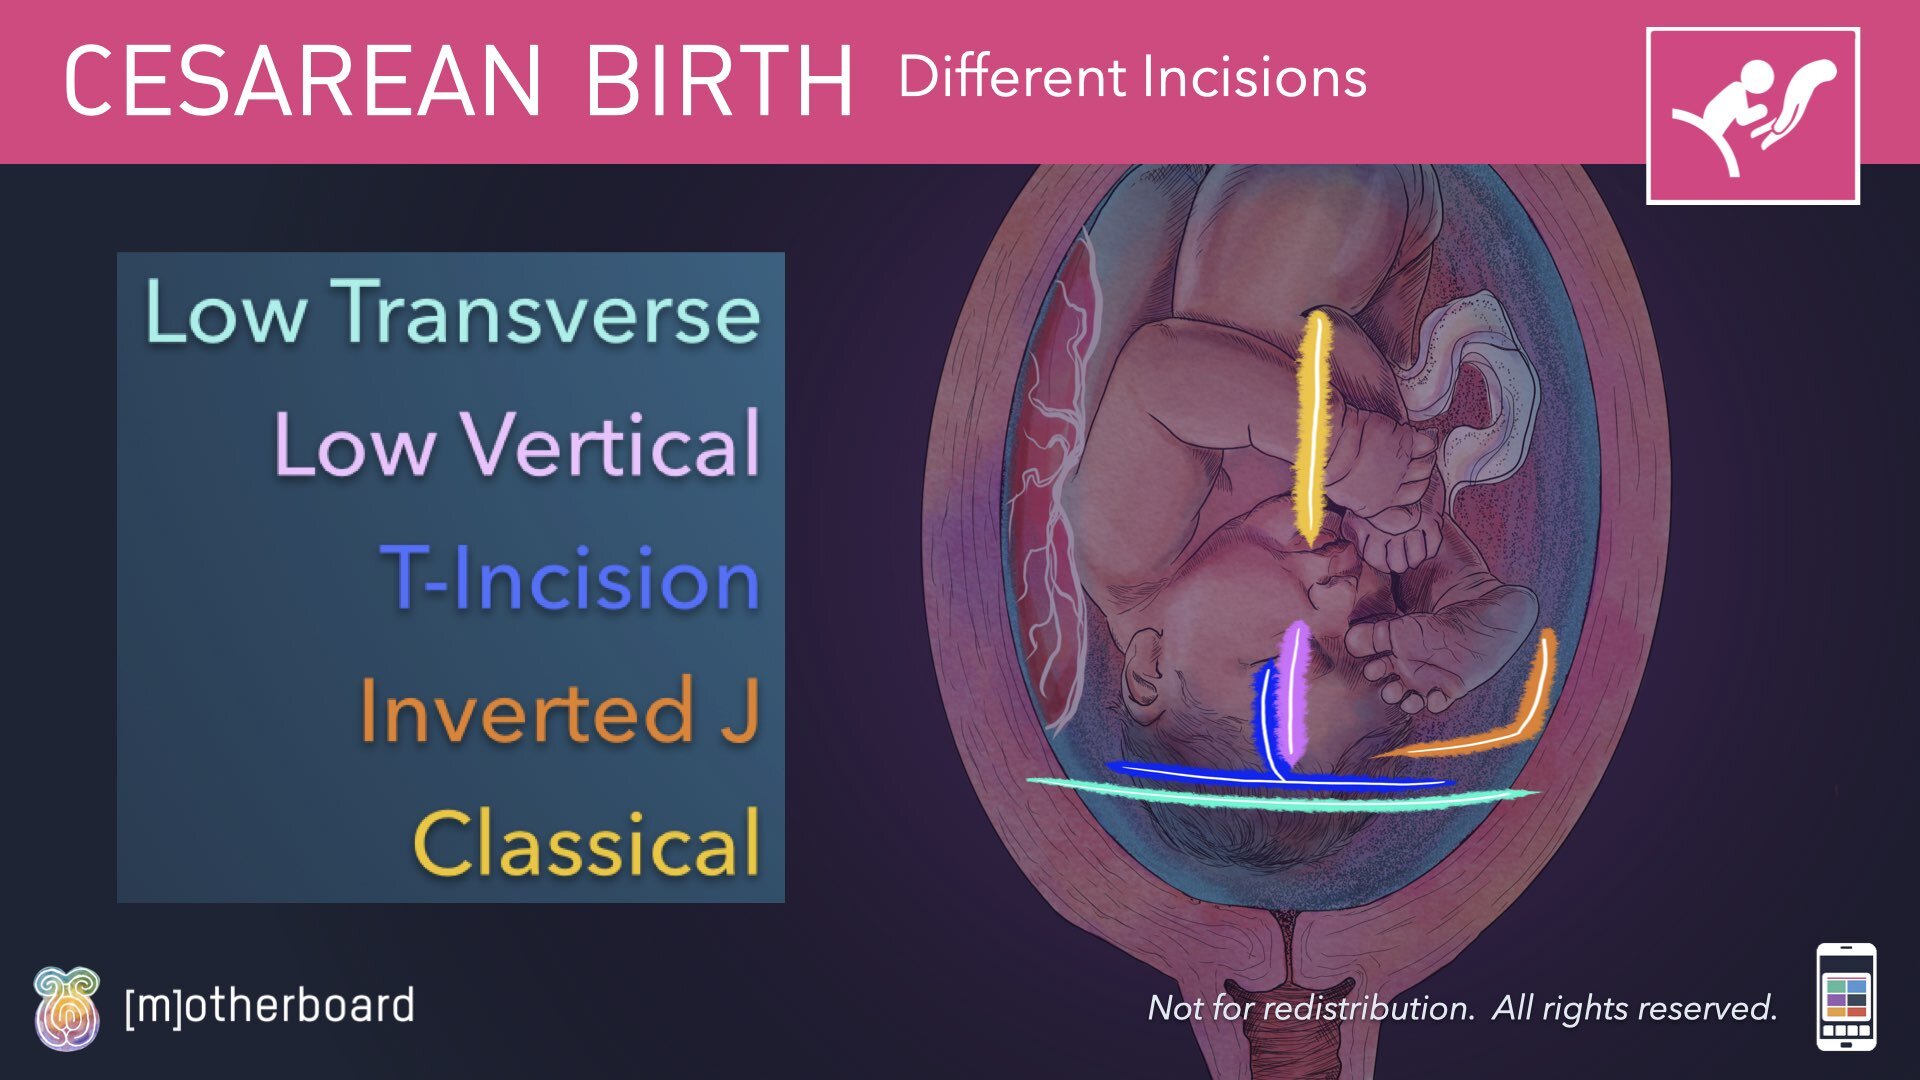 Cesarean Birth Images.008.jpeg